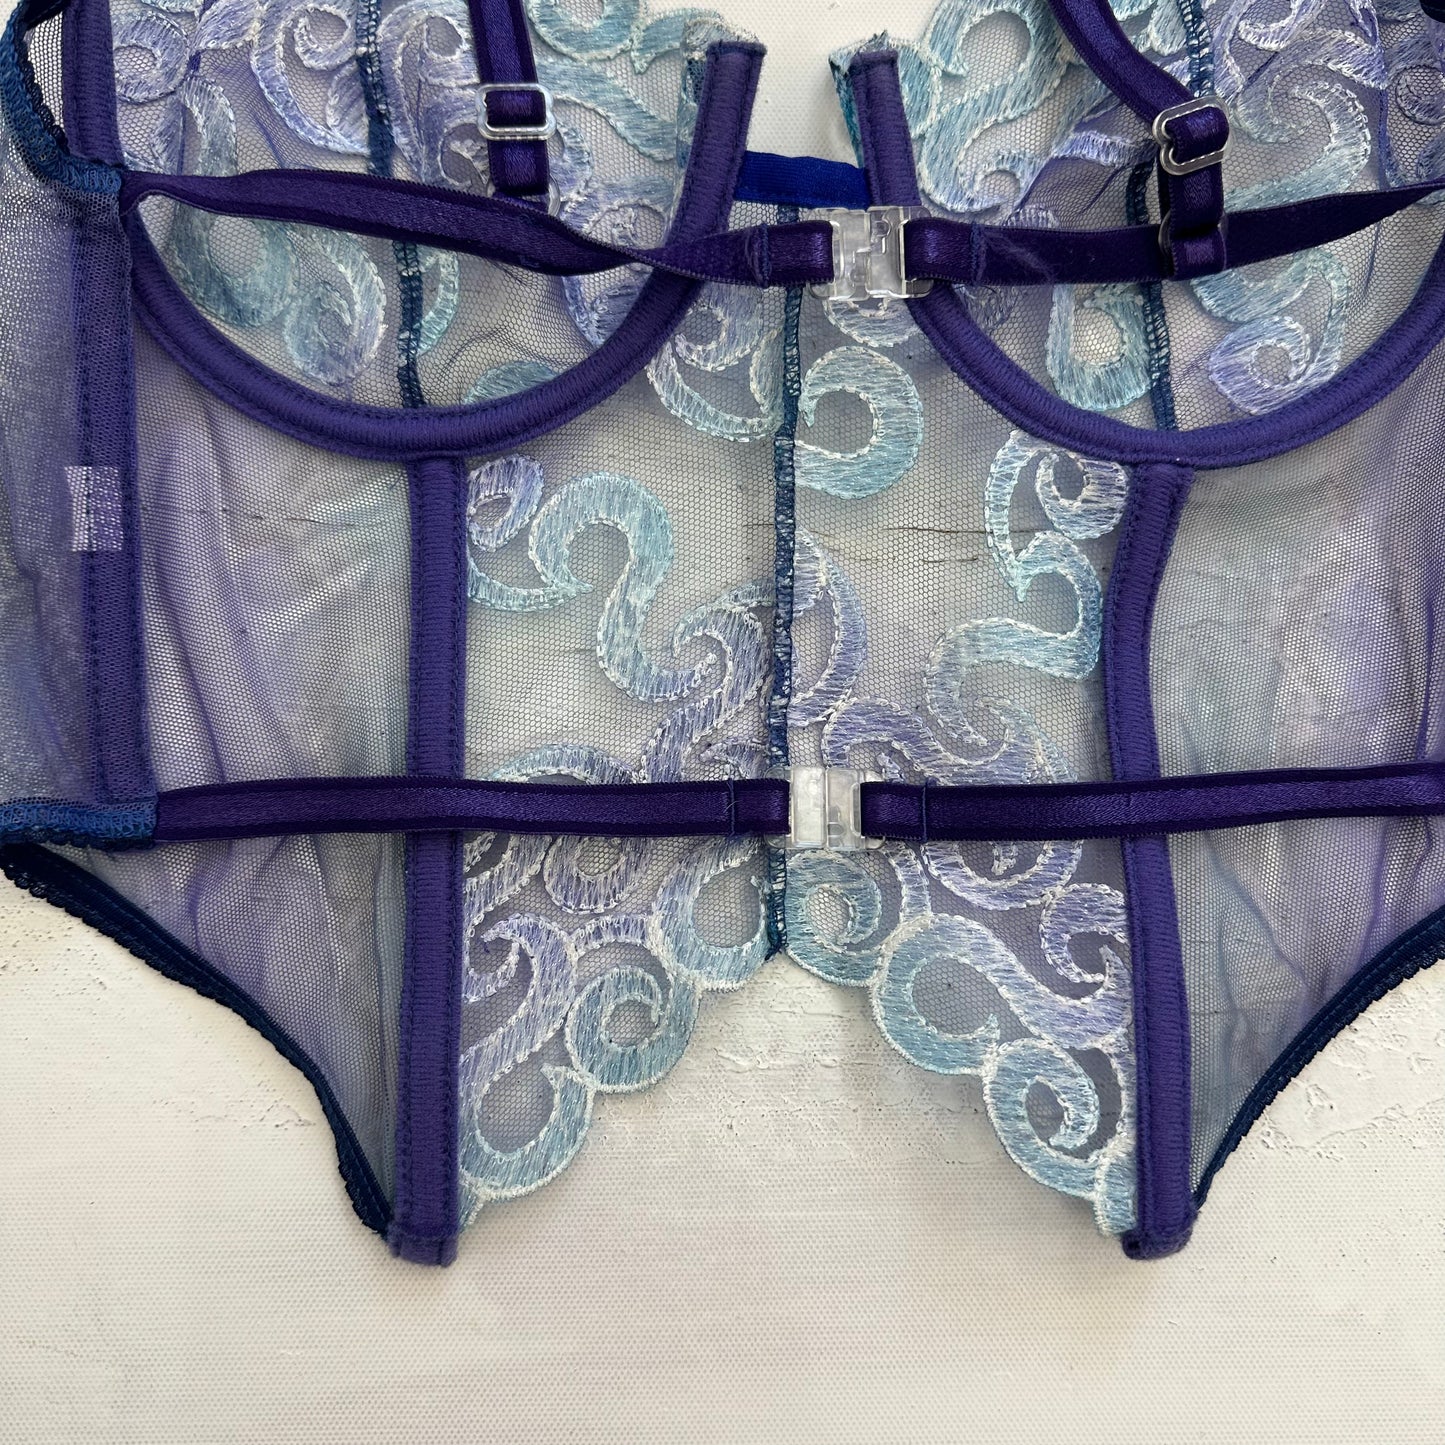 DAINTY DROP | blue/purple lace corset - small